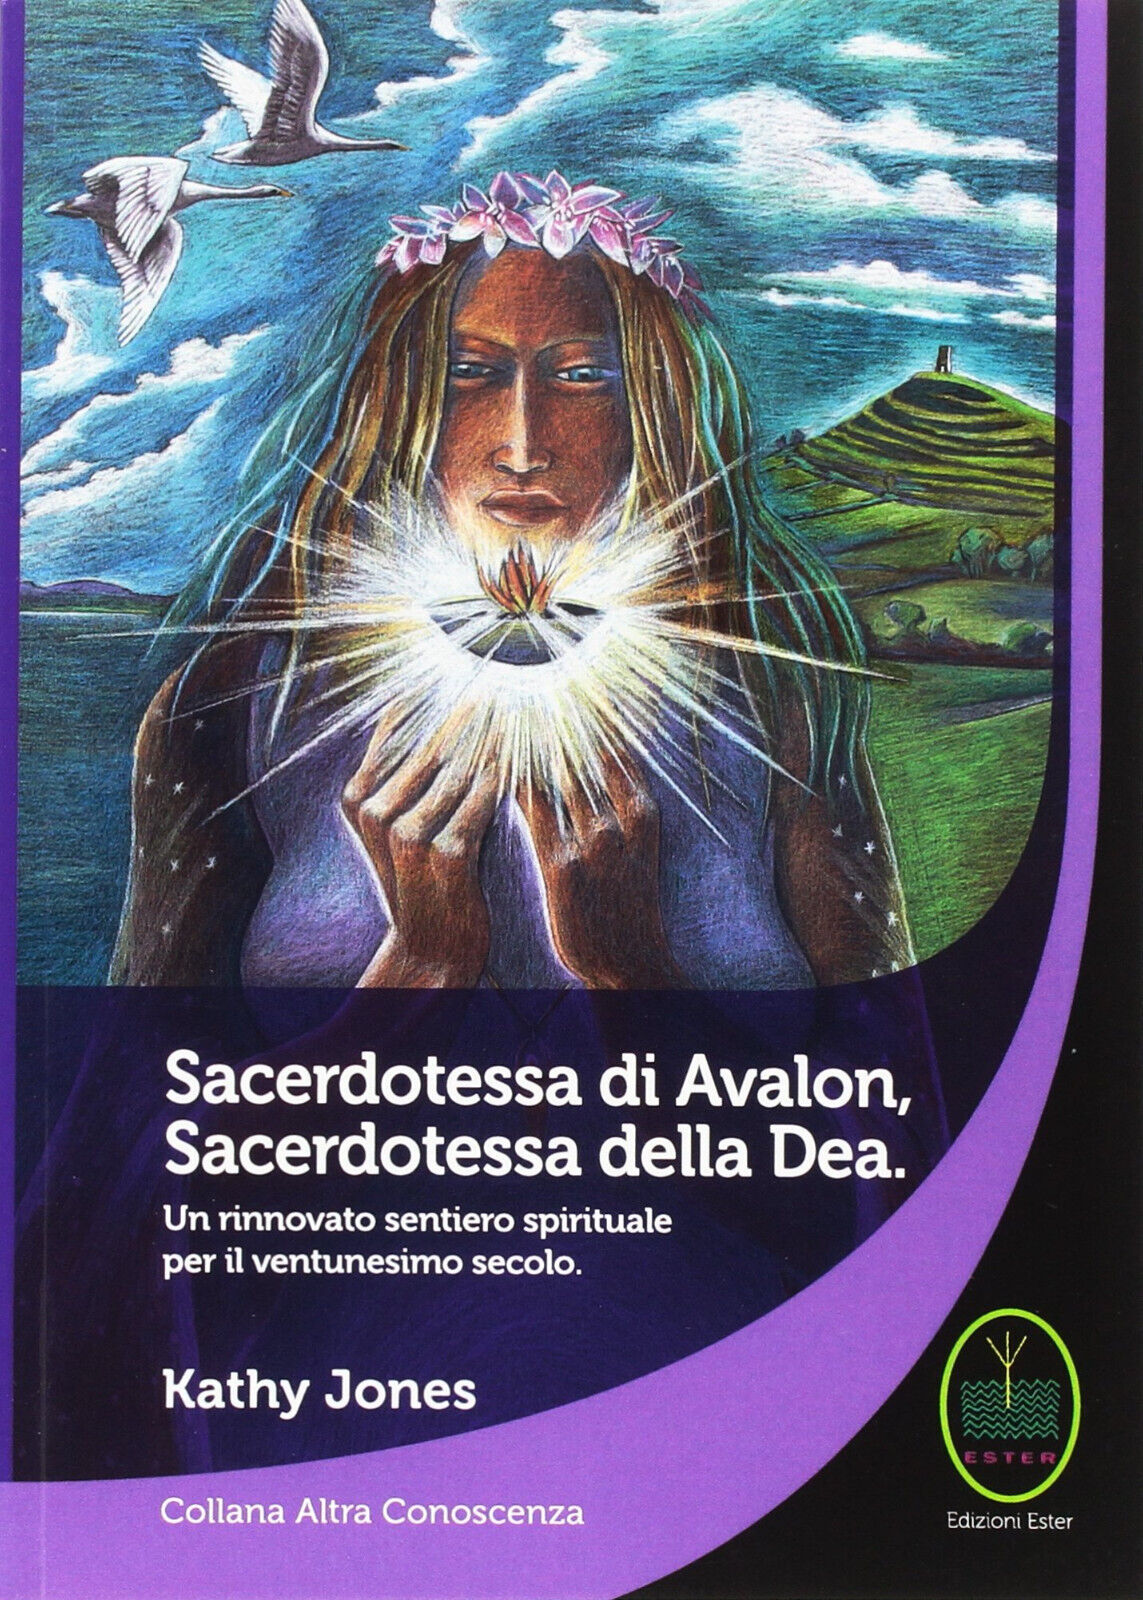 Sacerdotessa di Avalon sacerdotessa della Dea - Kathy Jones - Ester, 2014